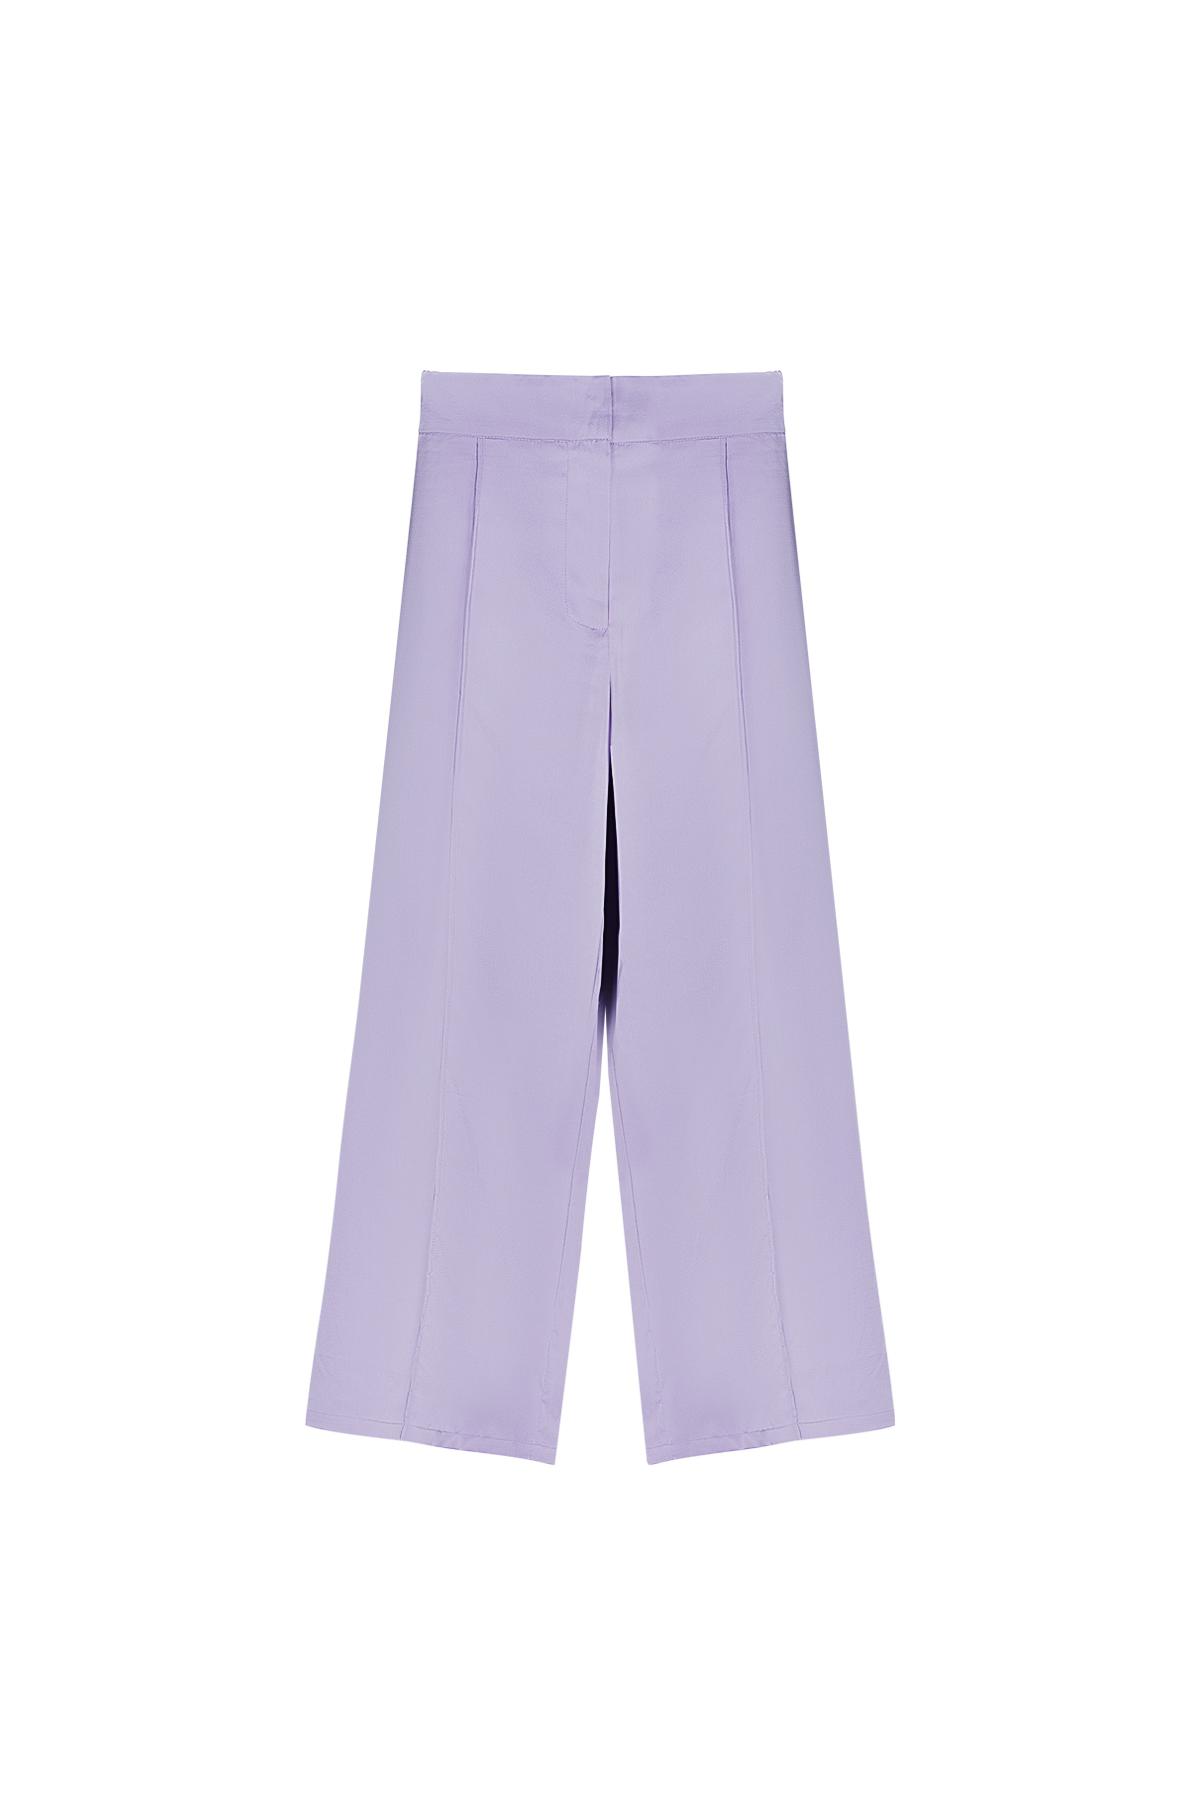 Pantalon tissu brillant Violet S 